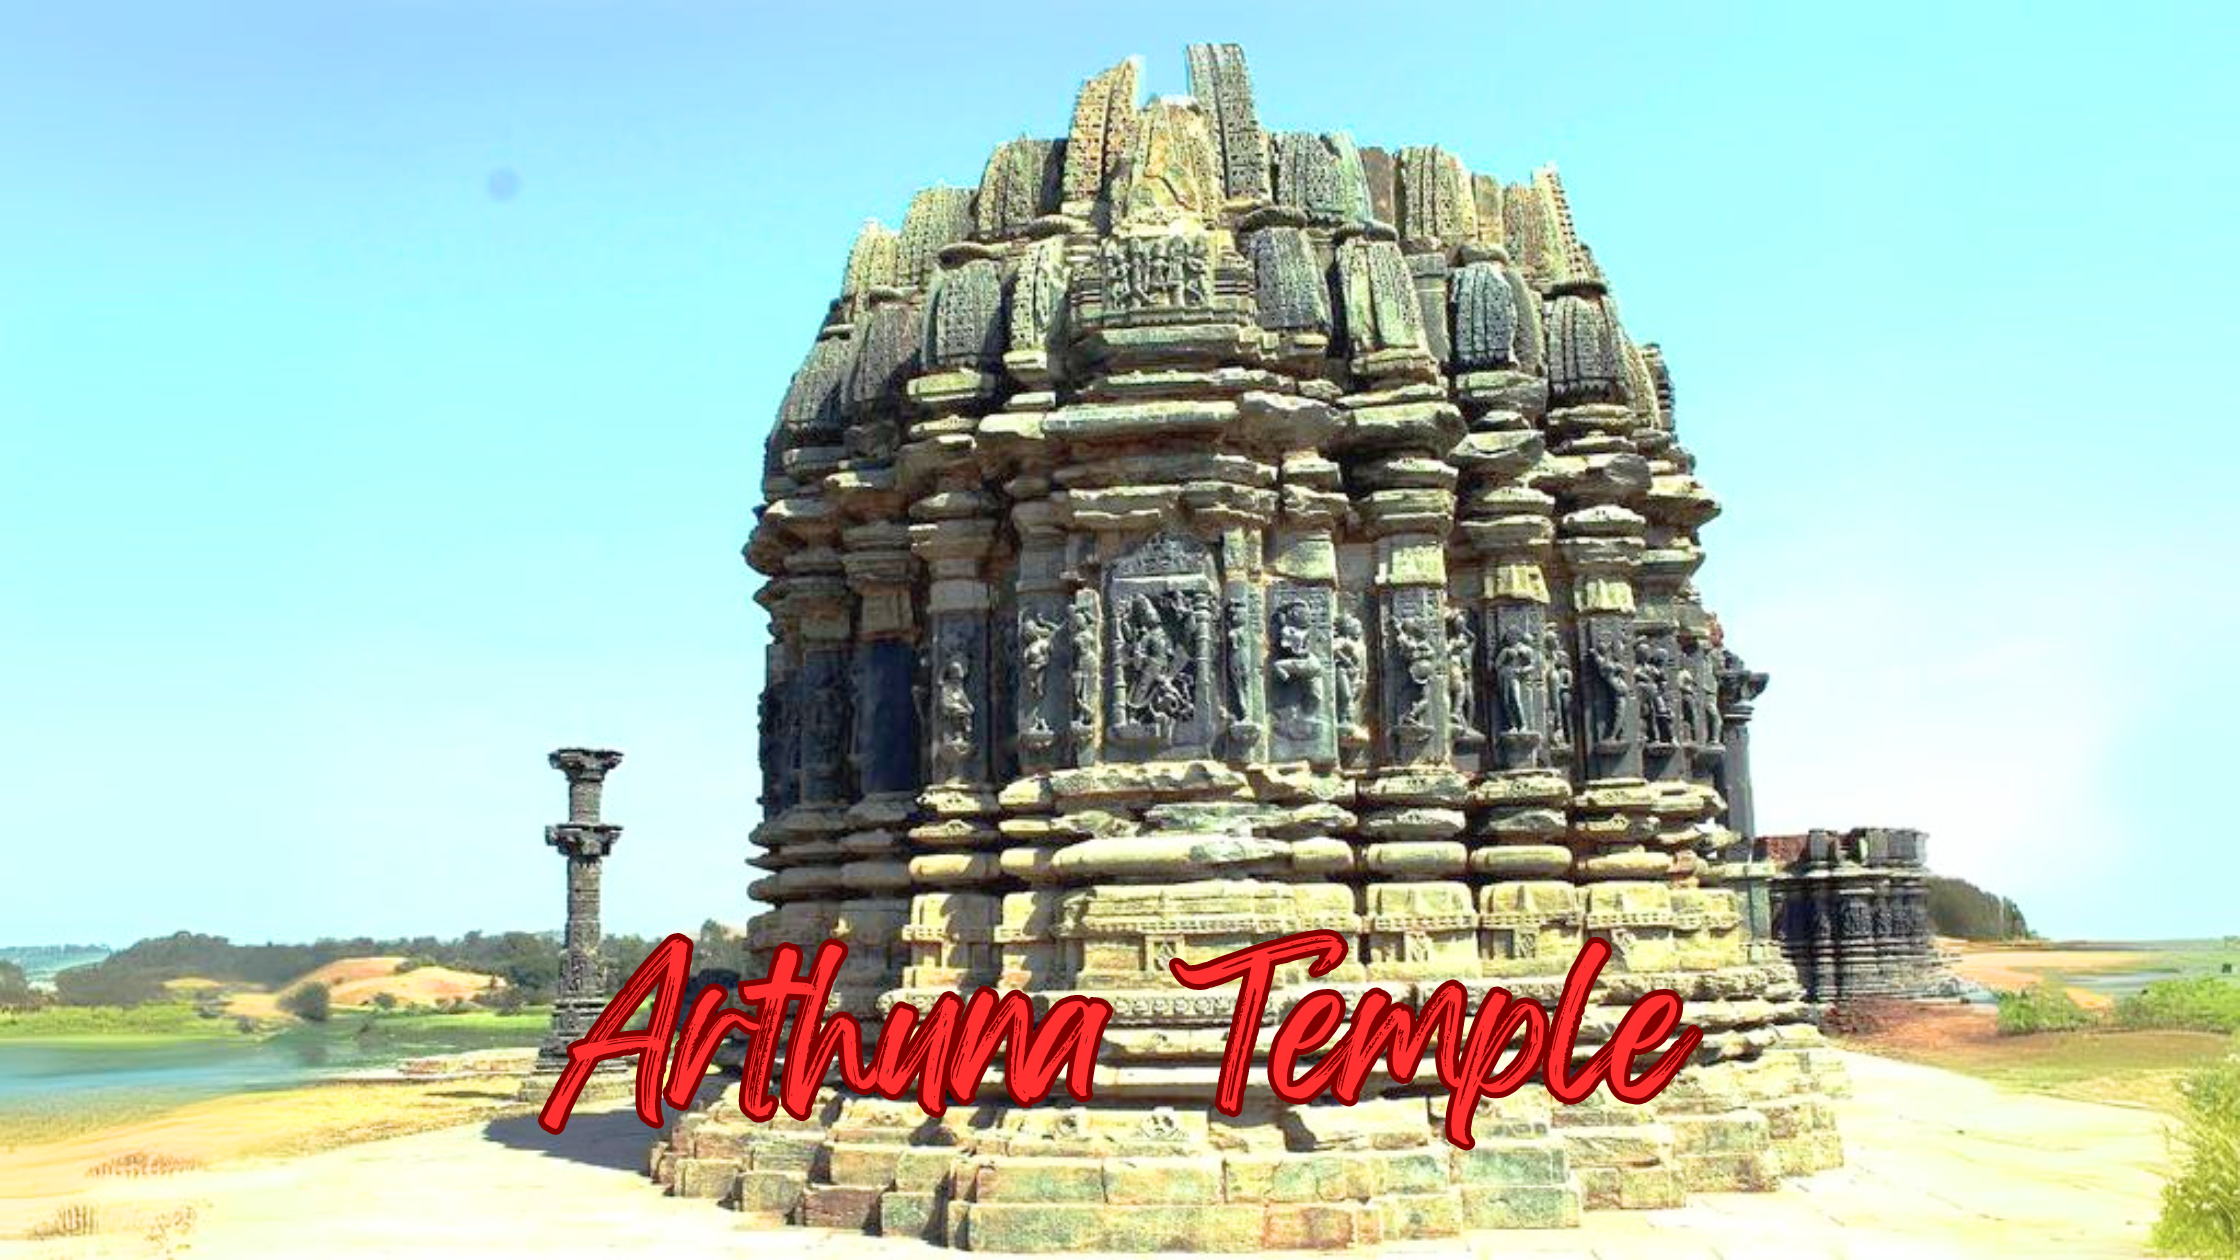 Arthuna temple